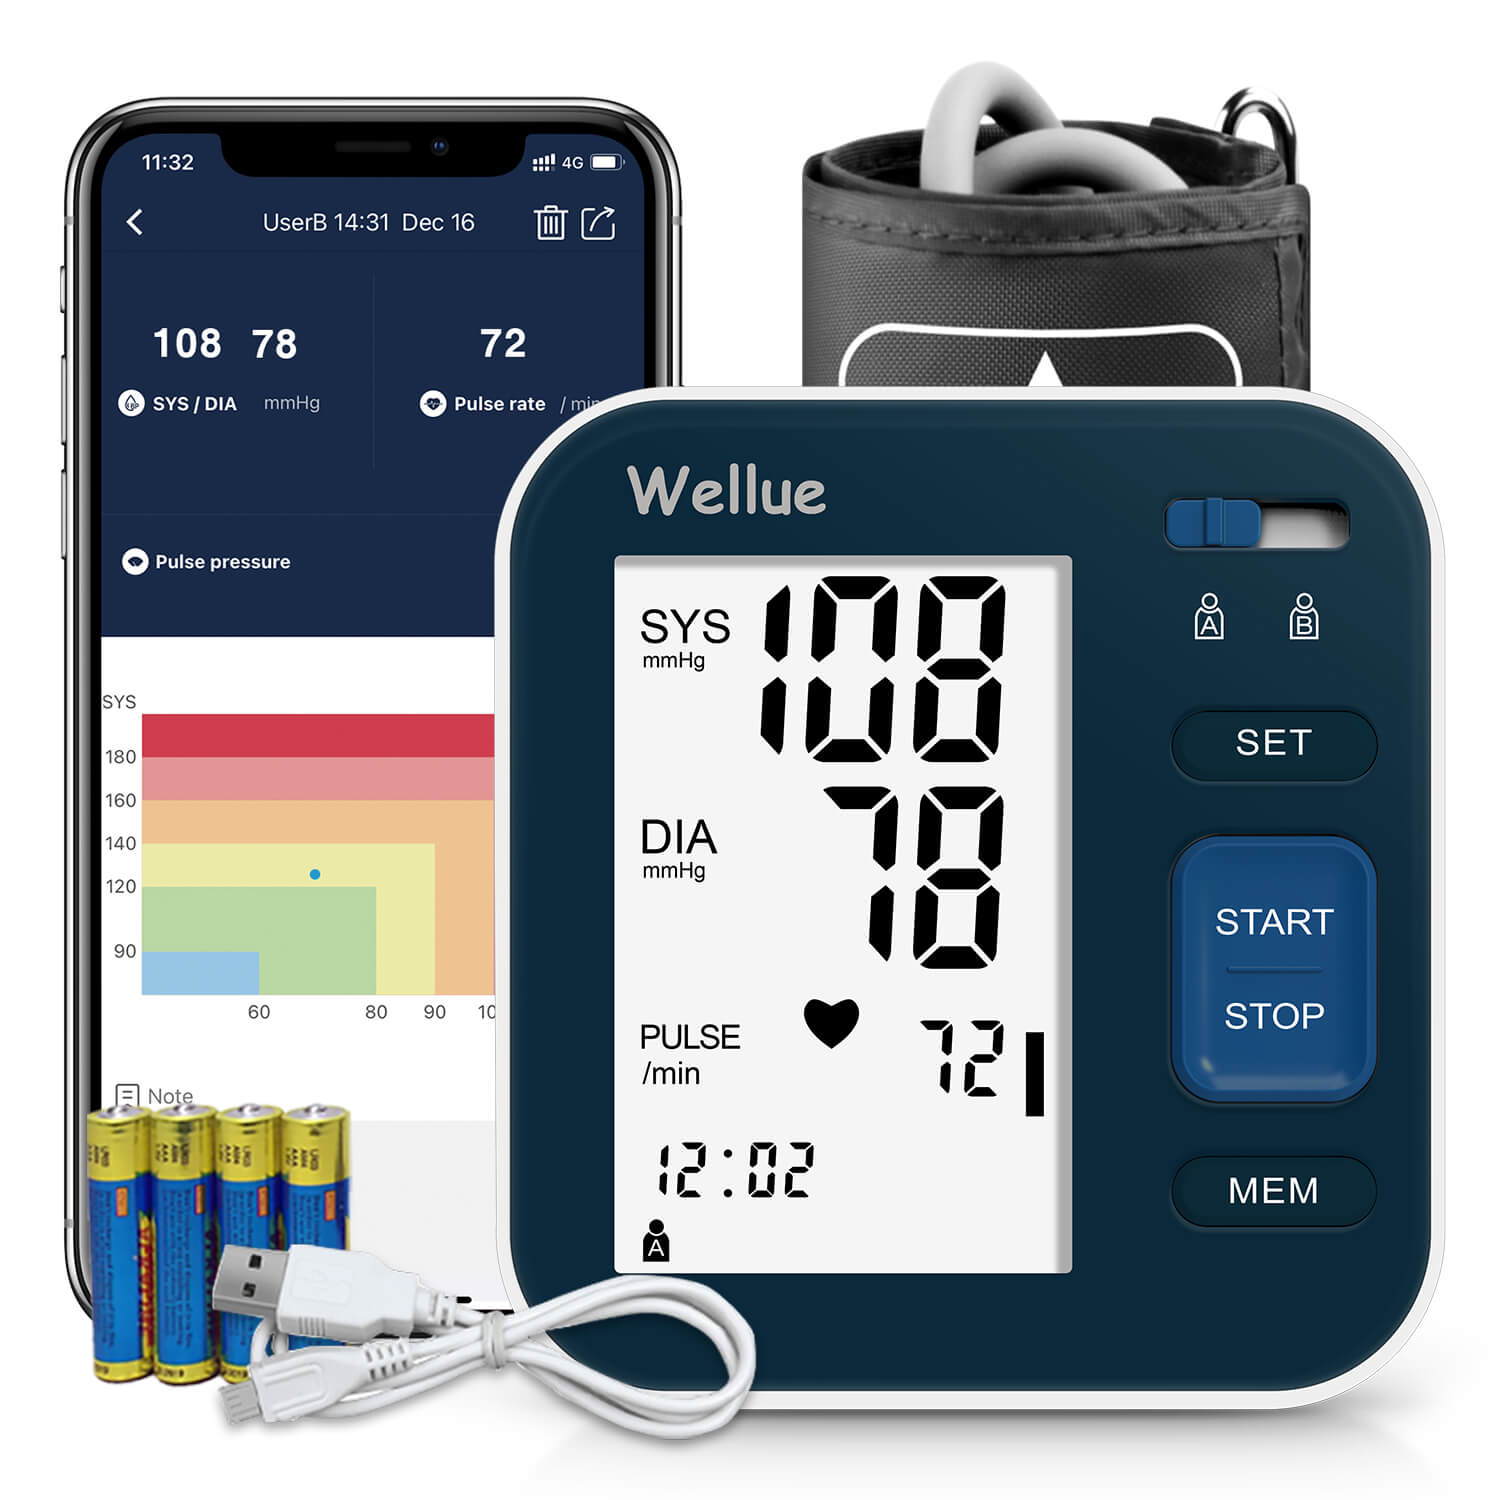 Wellue Bluetooth upper arm blood monitor in dark blue.